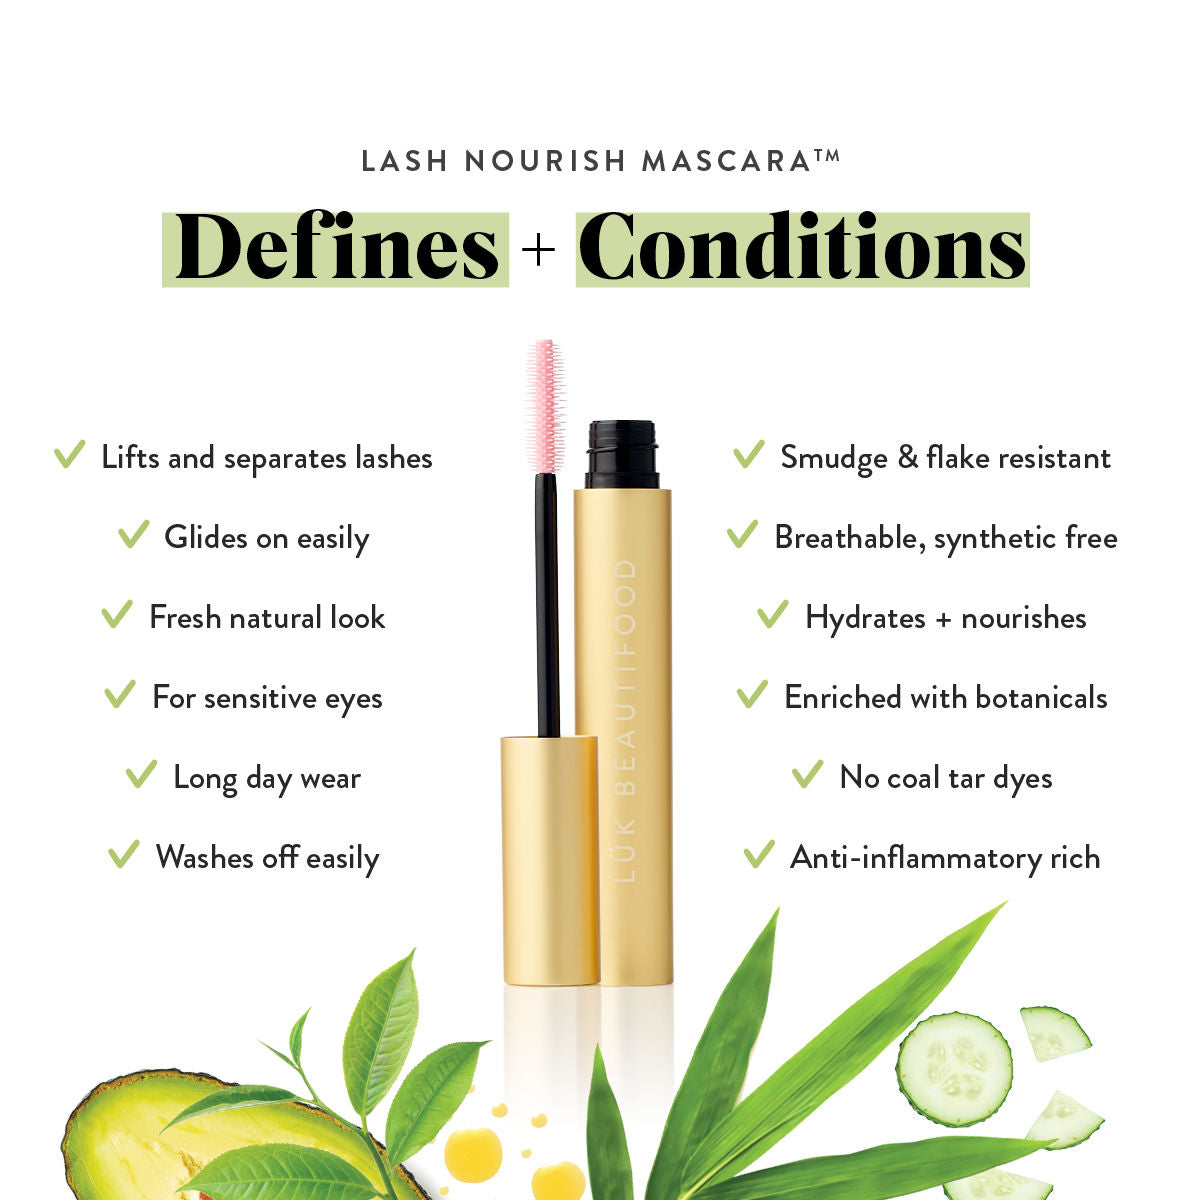 Luk Beautifood Natural Mascara Benefits